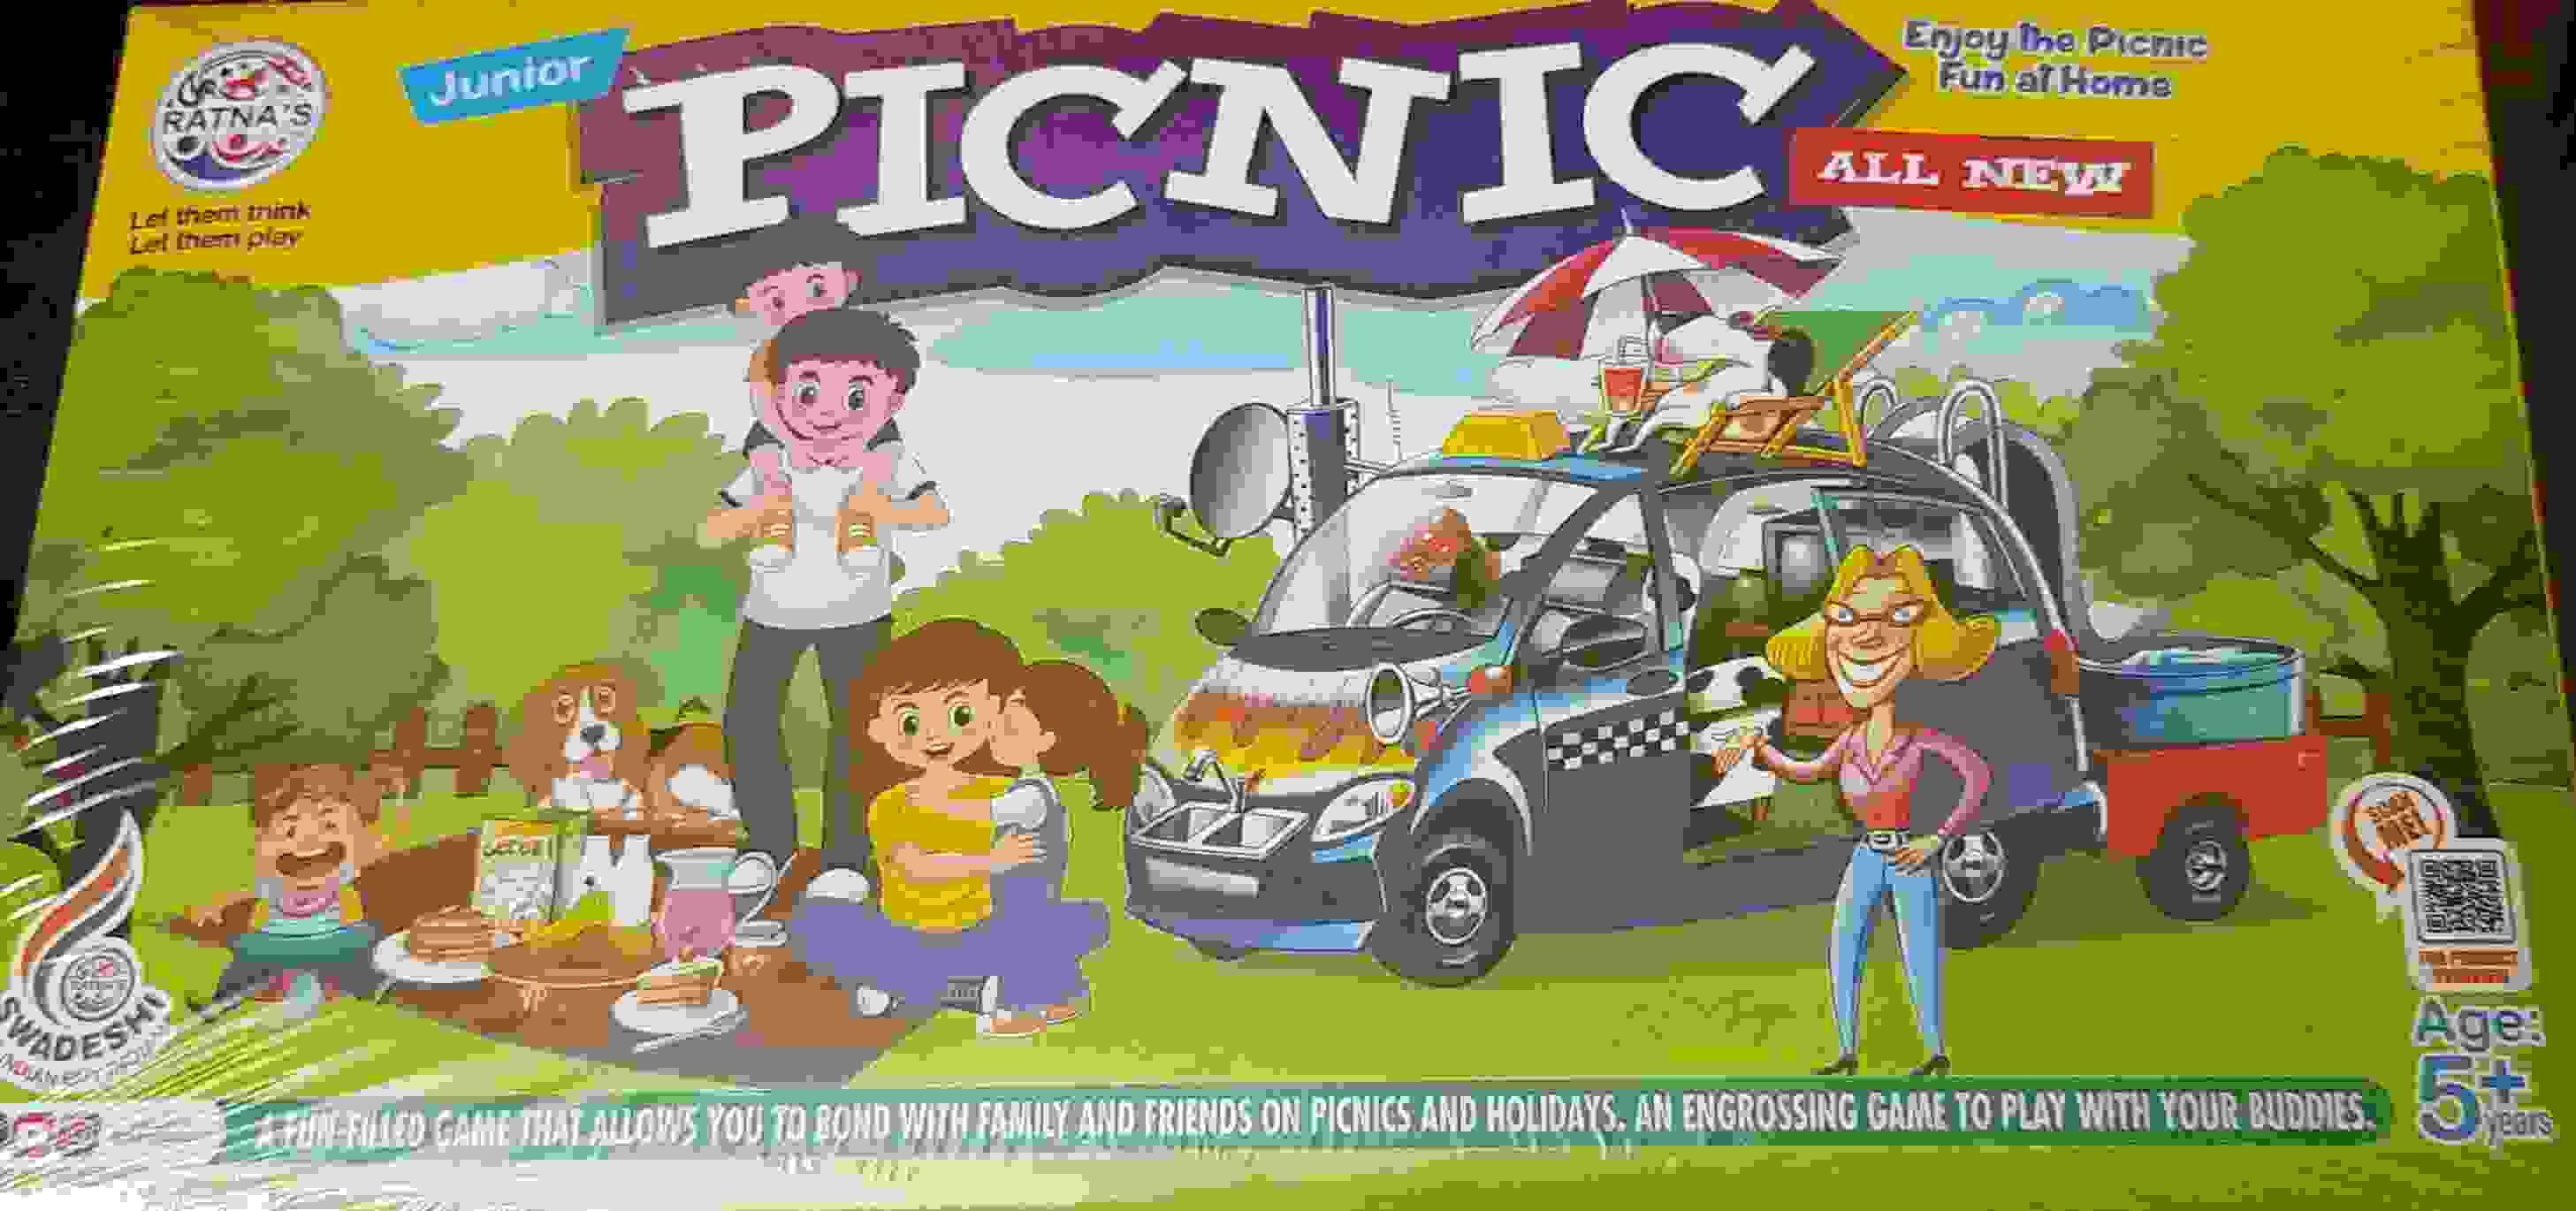 Ratna's - Junior Picnic All New (Enjoy the picnic fun at home)